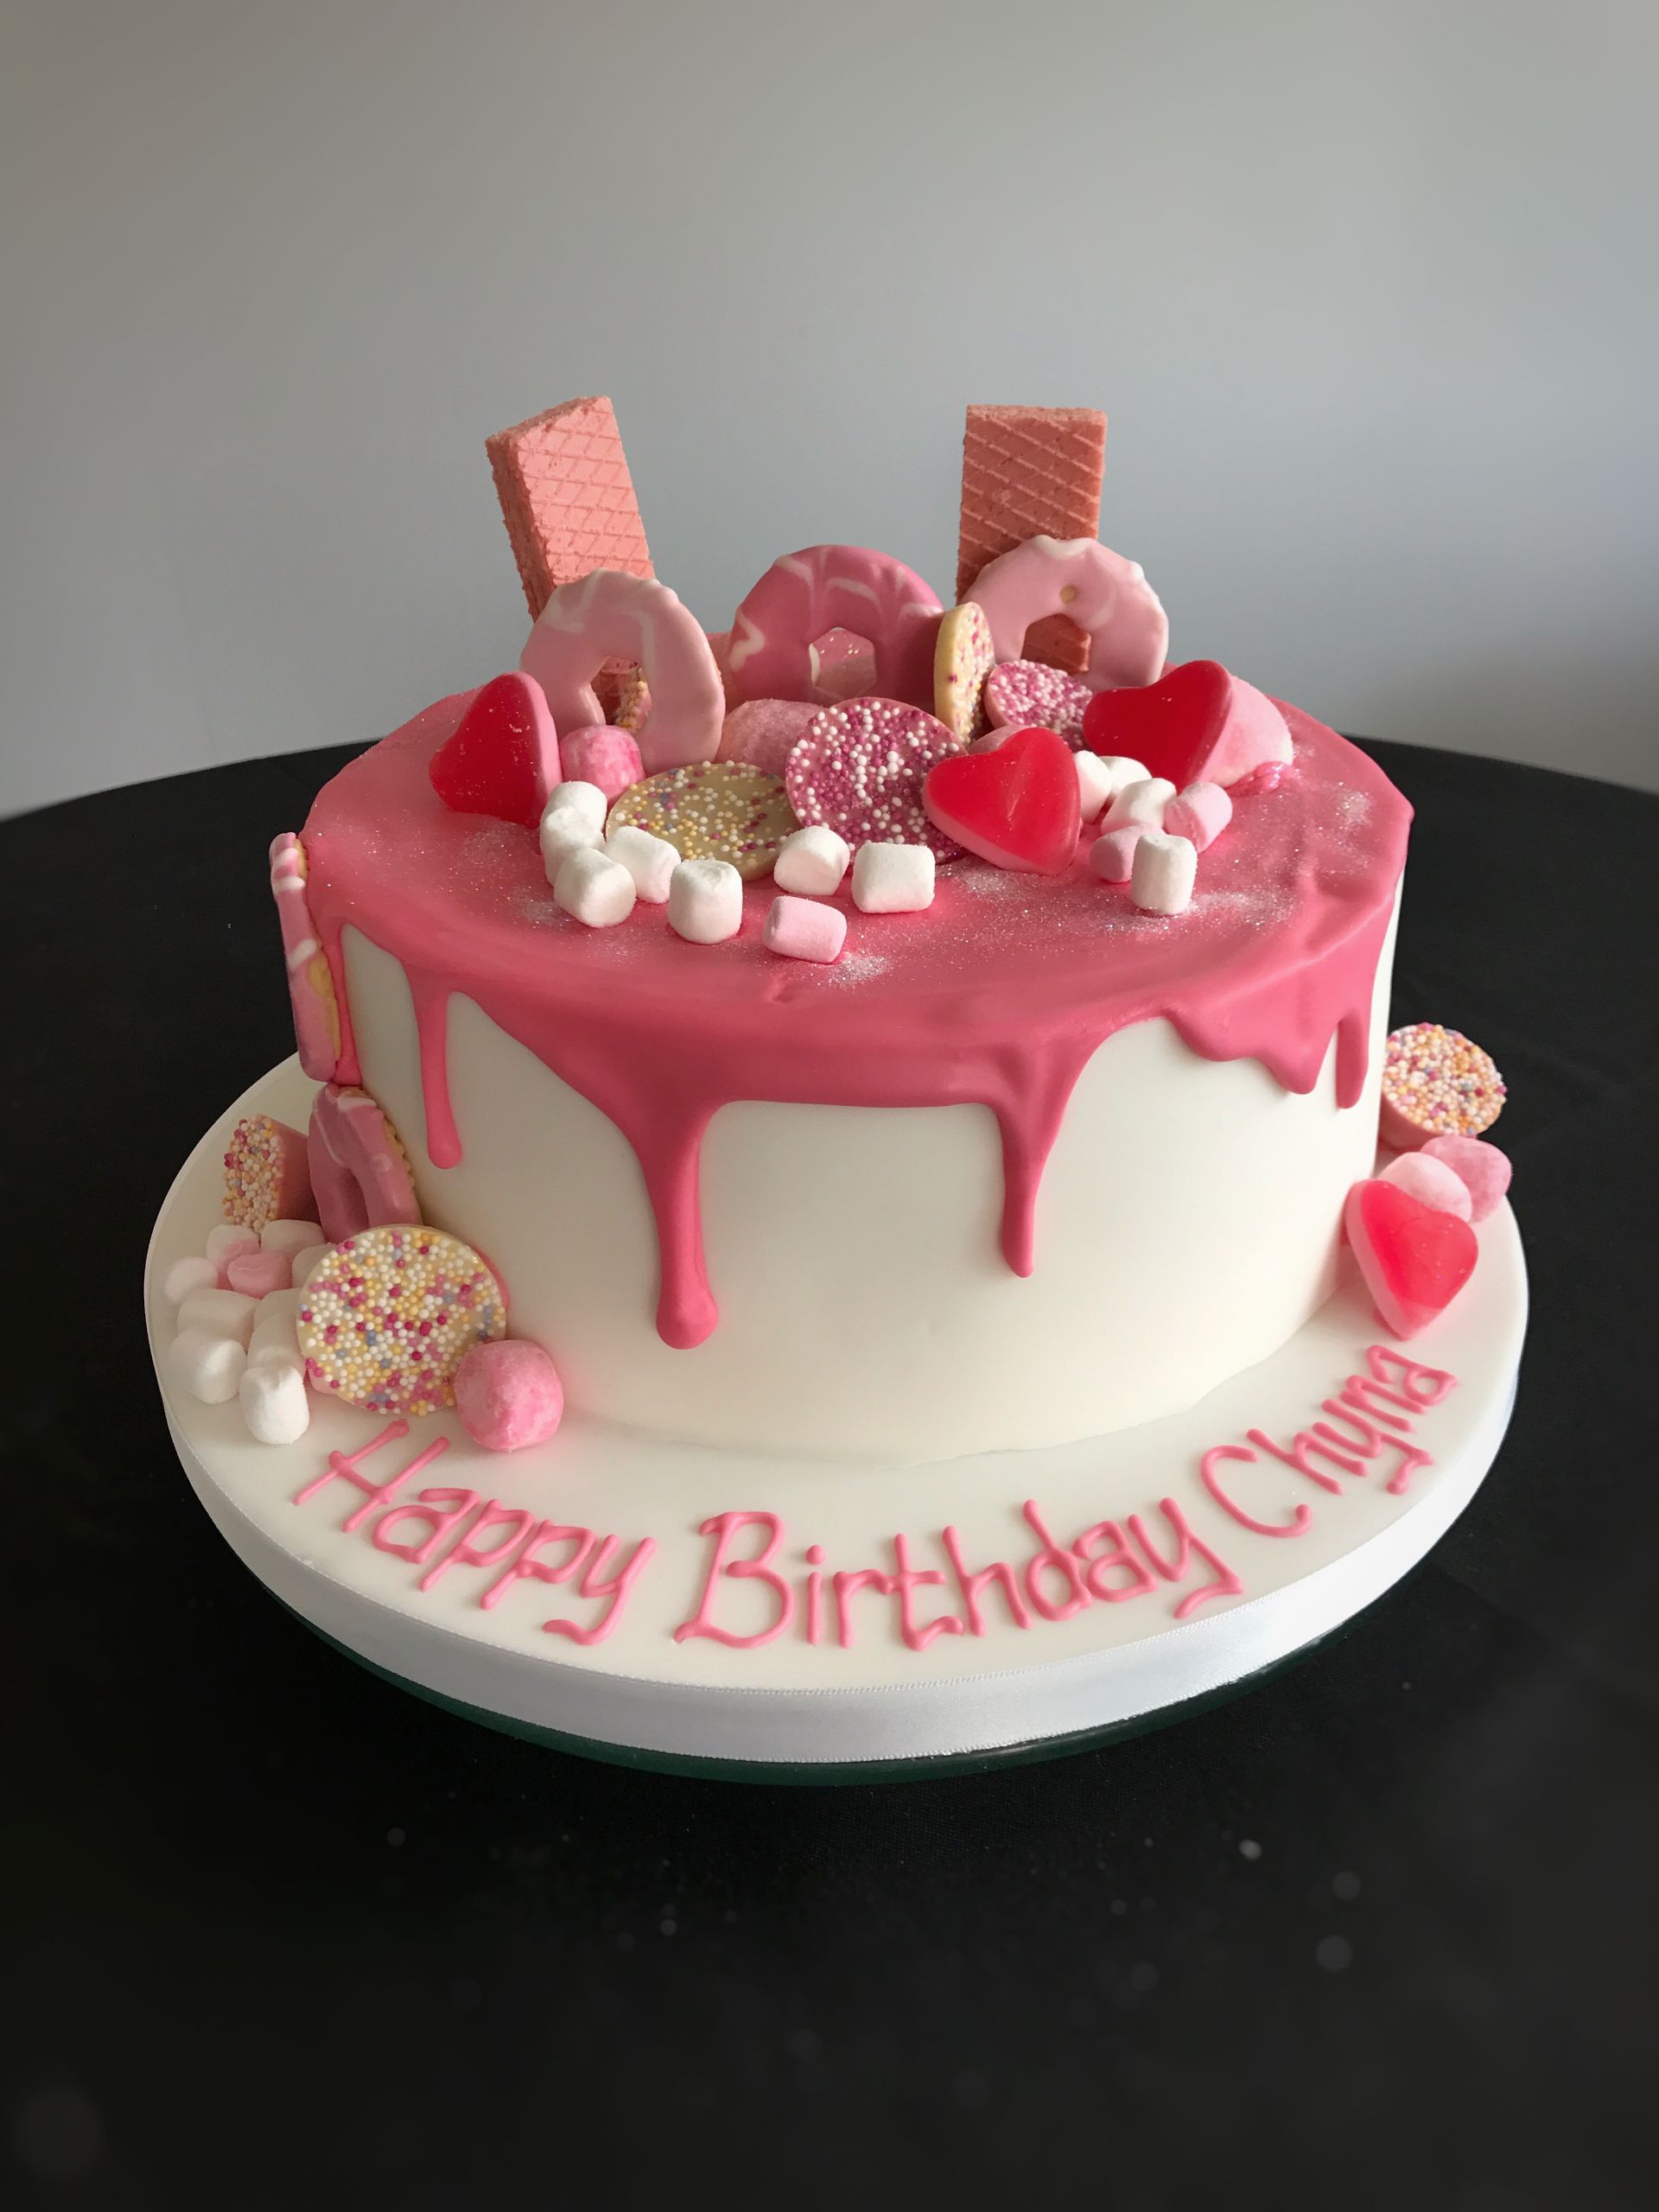 Images Of A Birthday Cake
 Female Birthday Cakes Bedfordshire Hertfordshire London